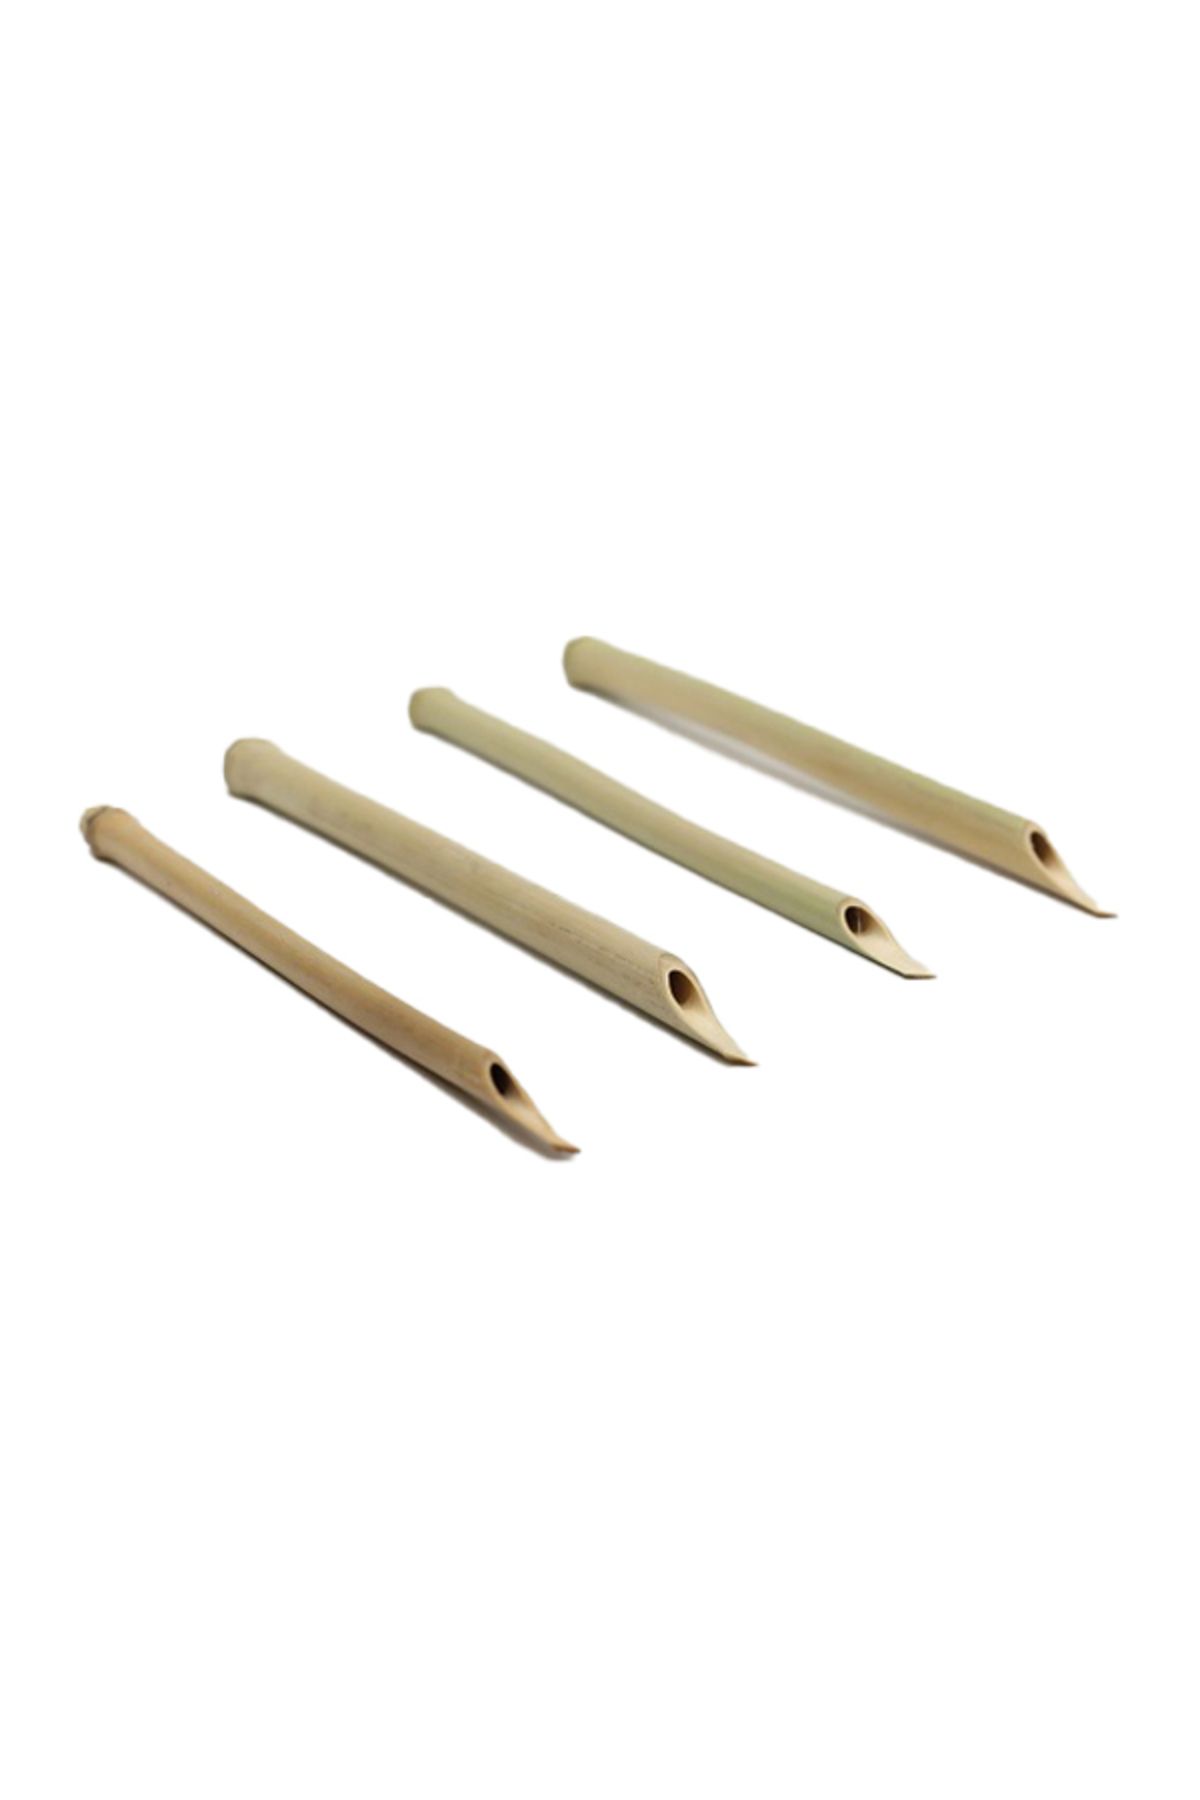 ÜSKÜDAR SANAT Bambu Kamış Kalem 4 Adet Hat Sanatı Kalemi Kamış Kalem Bambu Kalem